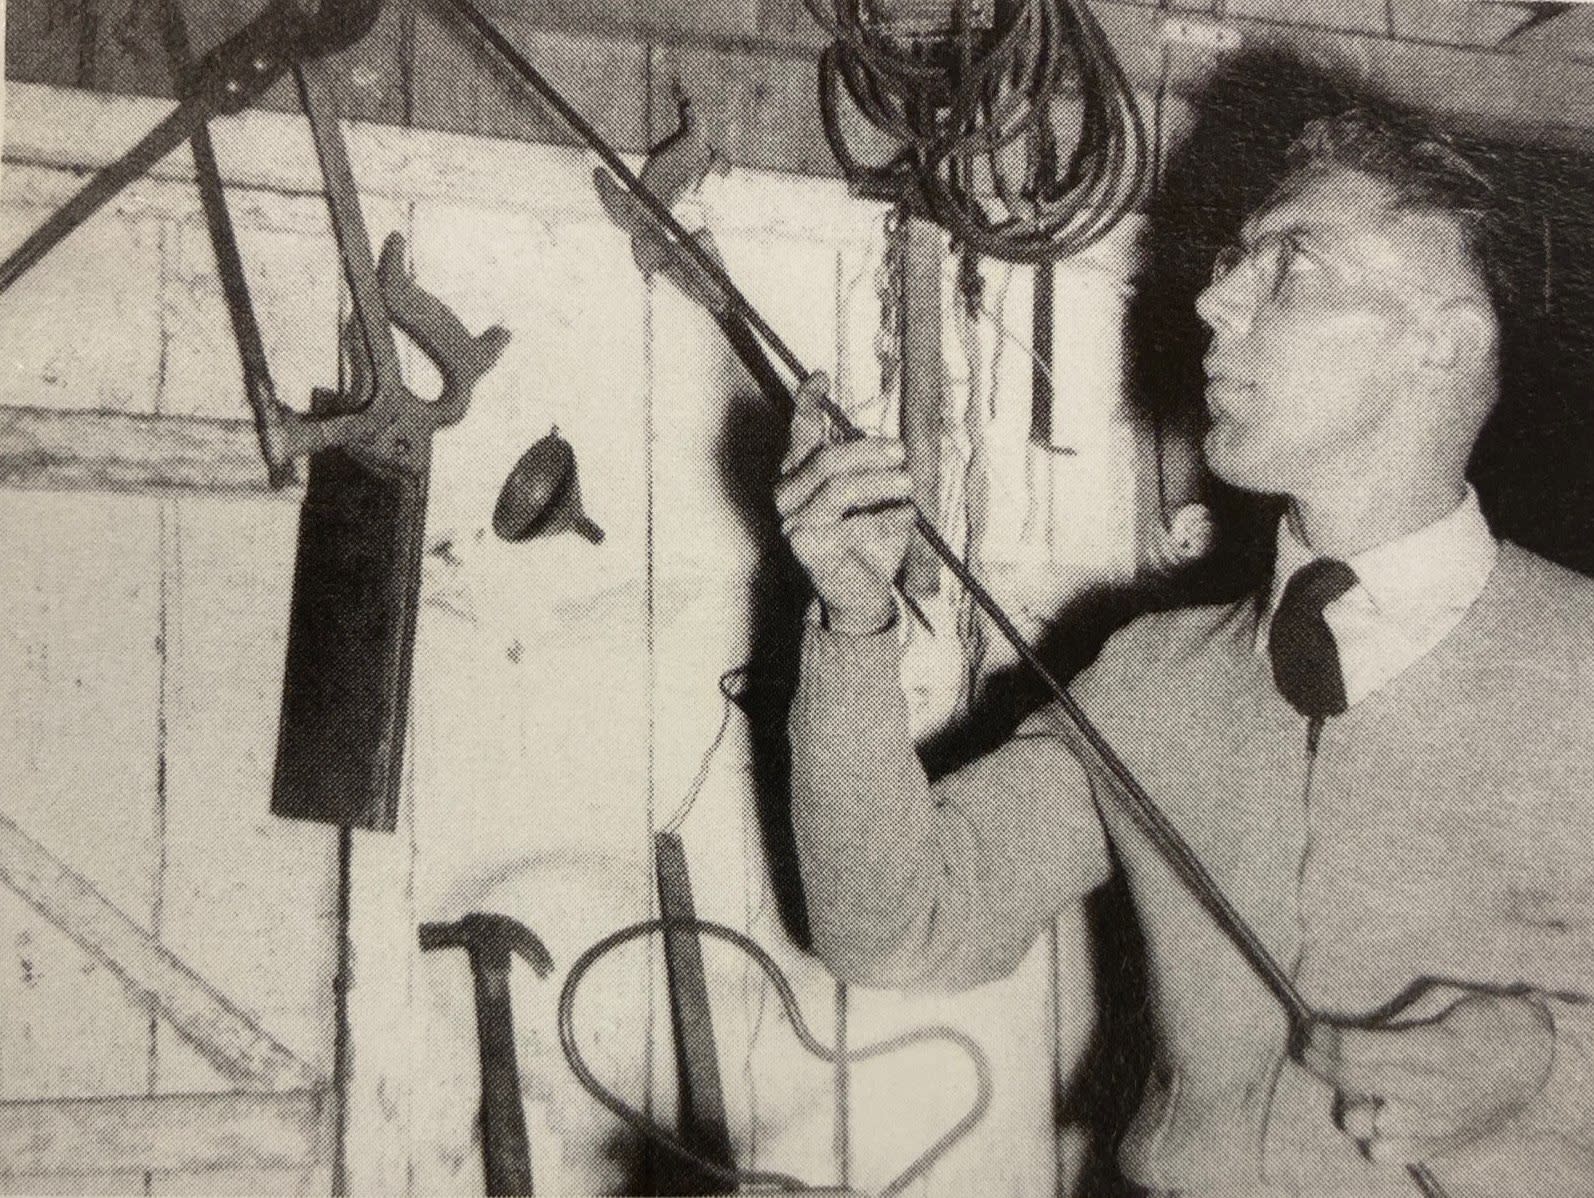 Luiz Sacilotto em seu ateliê / in his studio, 1952